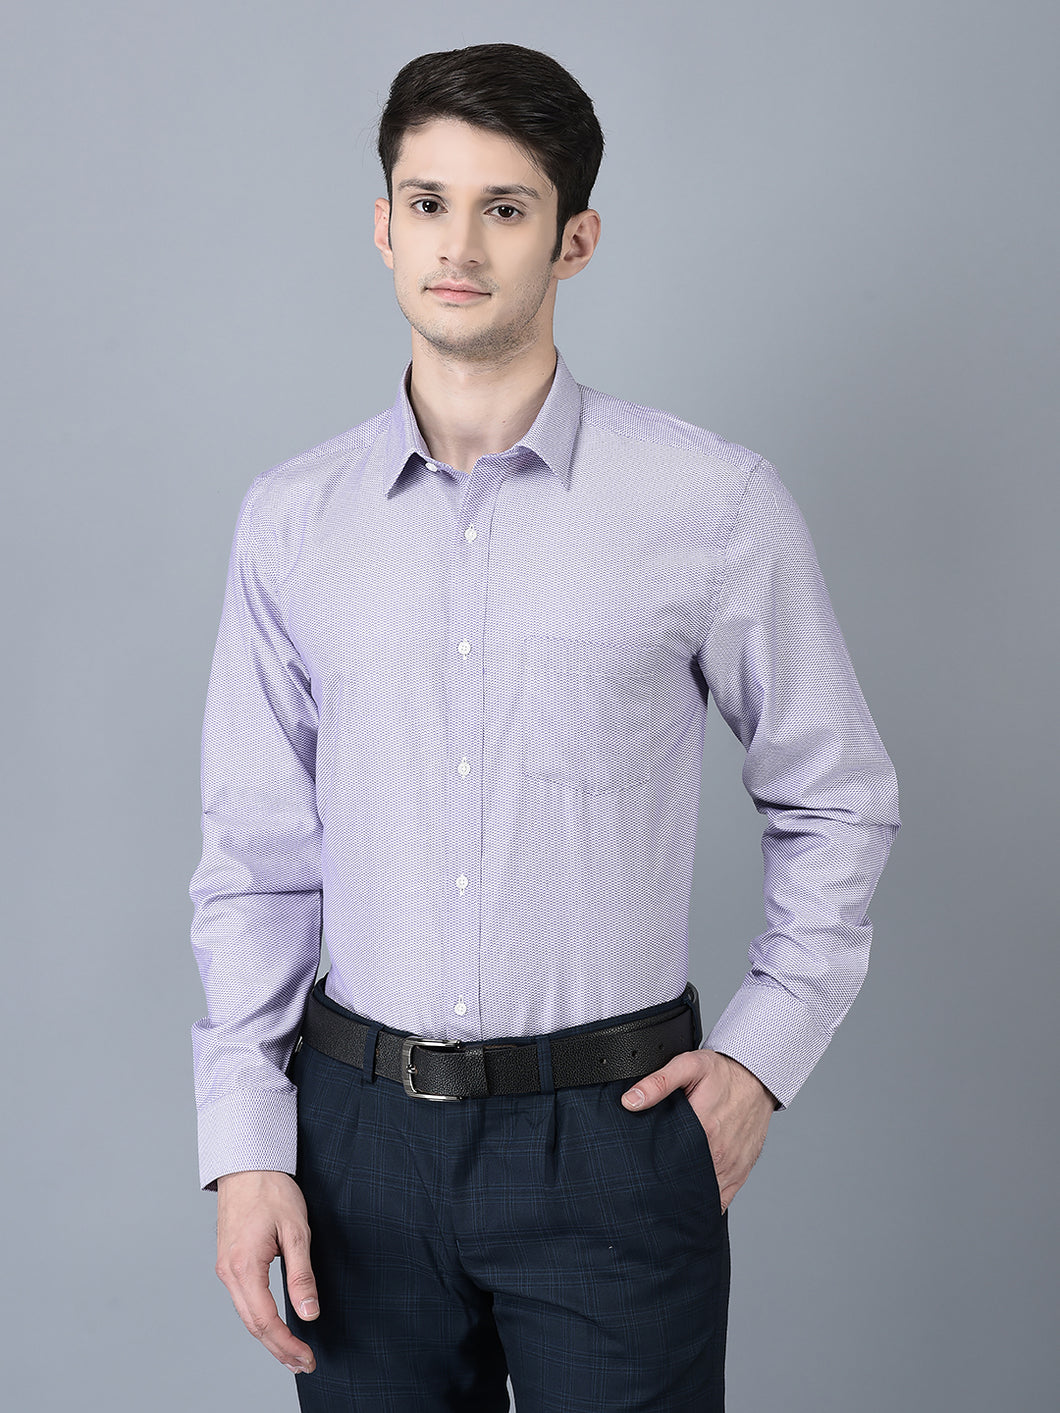 CANOE MEN Formal Shirt Purple Color Polyester Fabric Button Closure